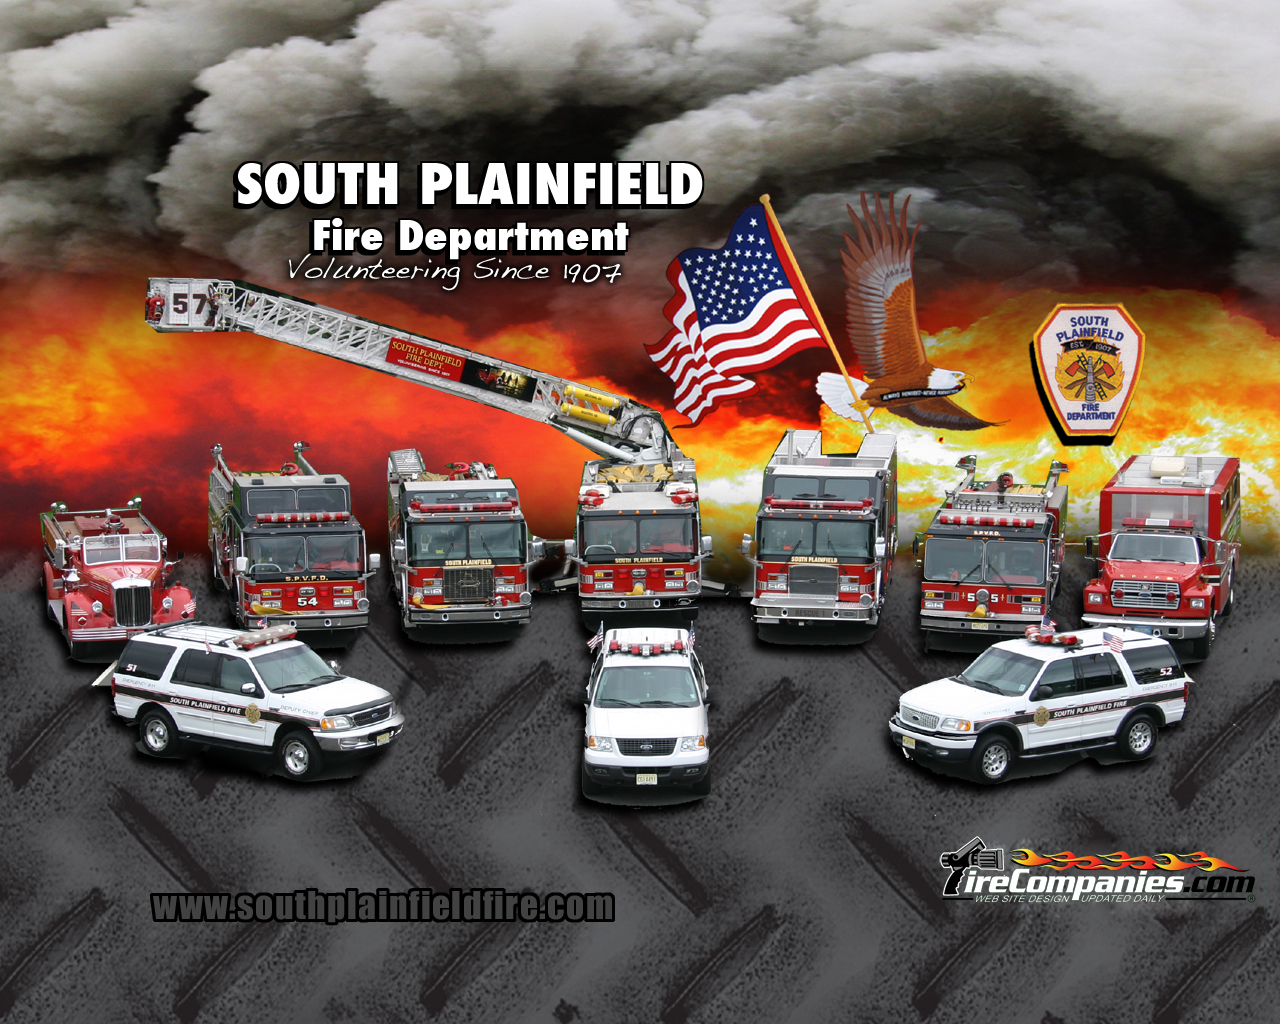 South Plainfield Fire Department